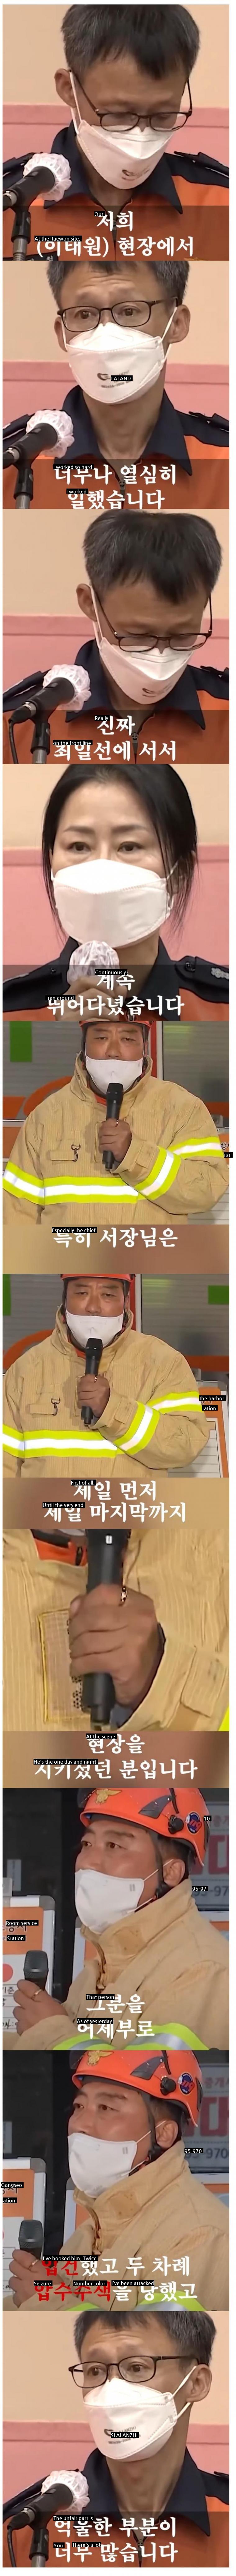 Itaewon Yongsan Fire Station Chief's Last Way